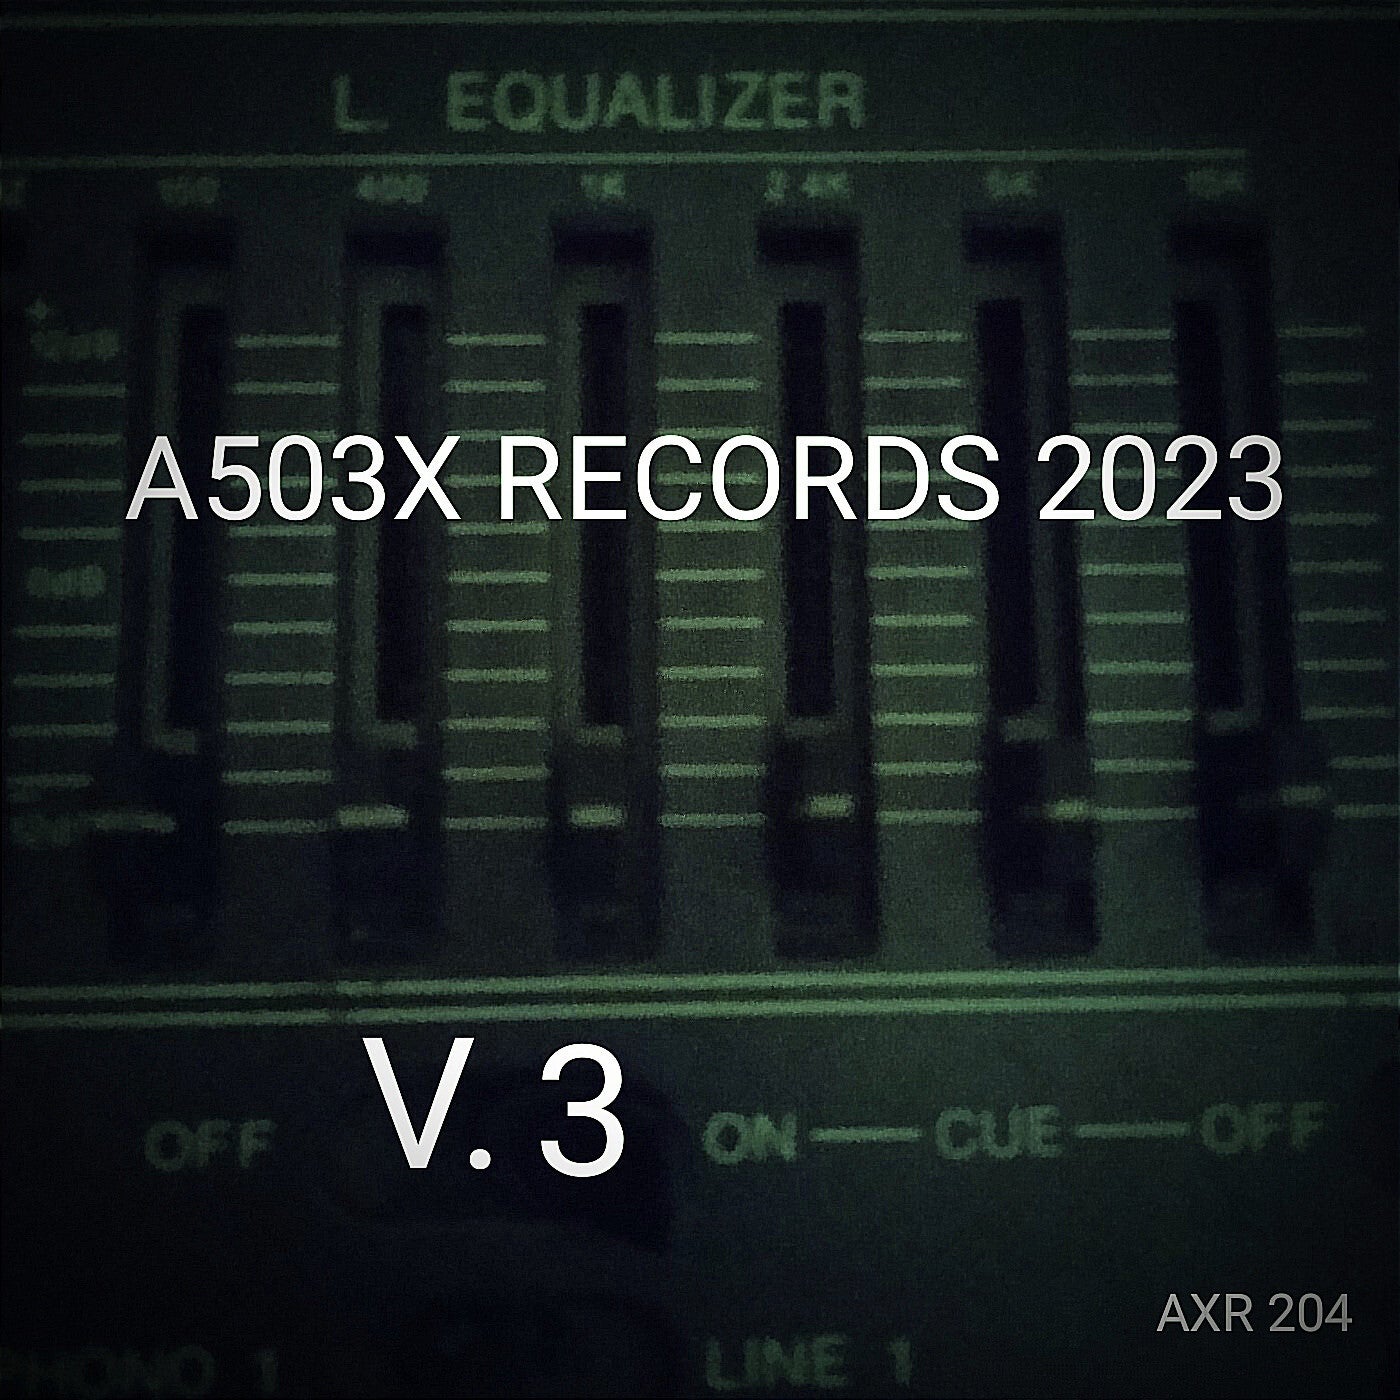 A503X RECORDS 2023 V.3